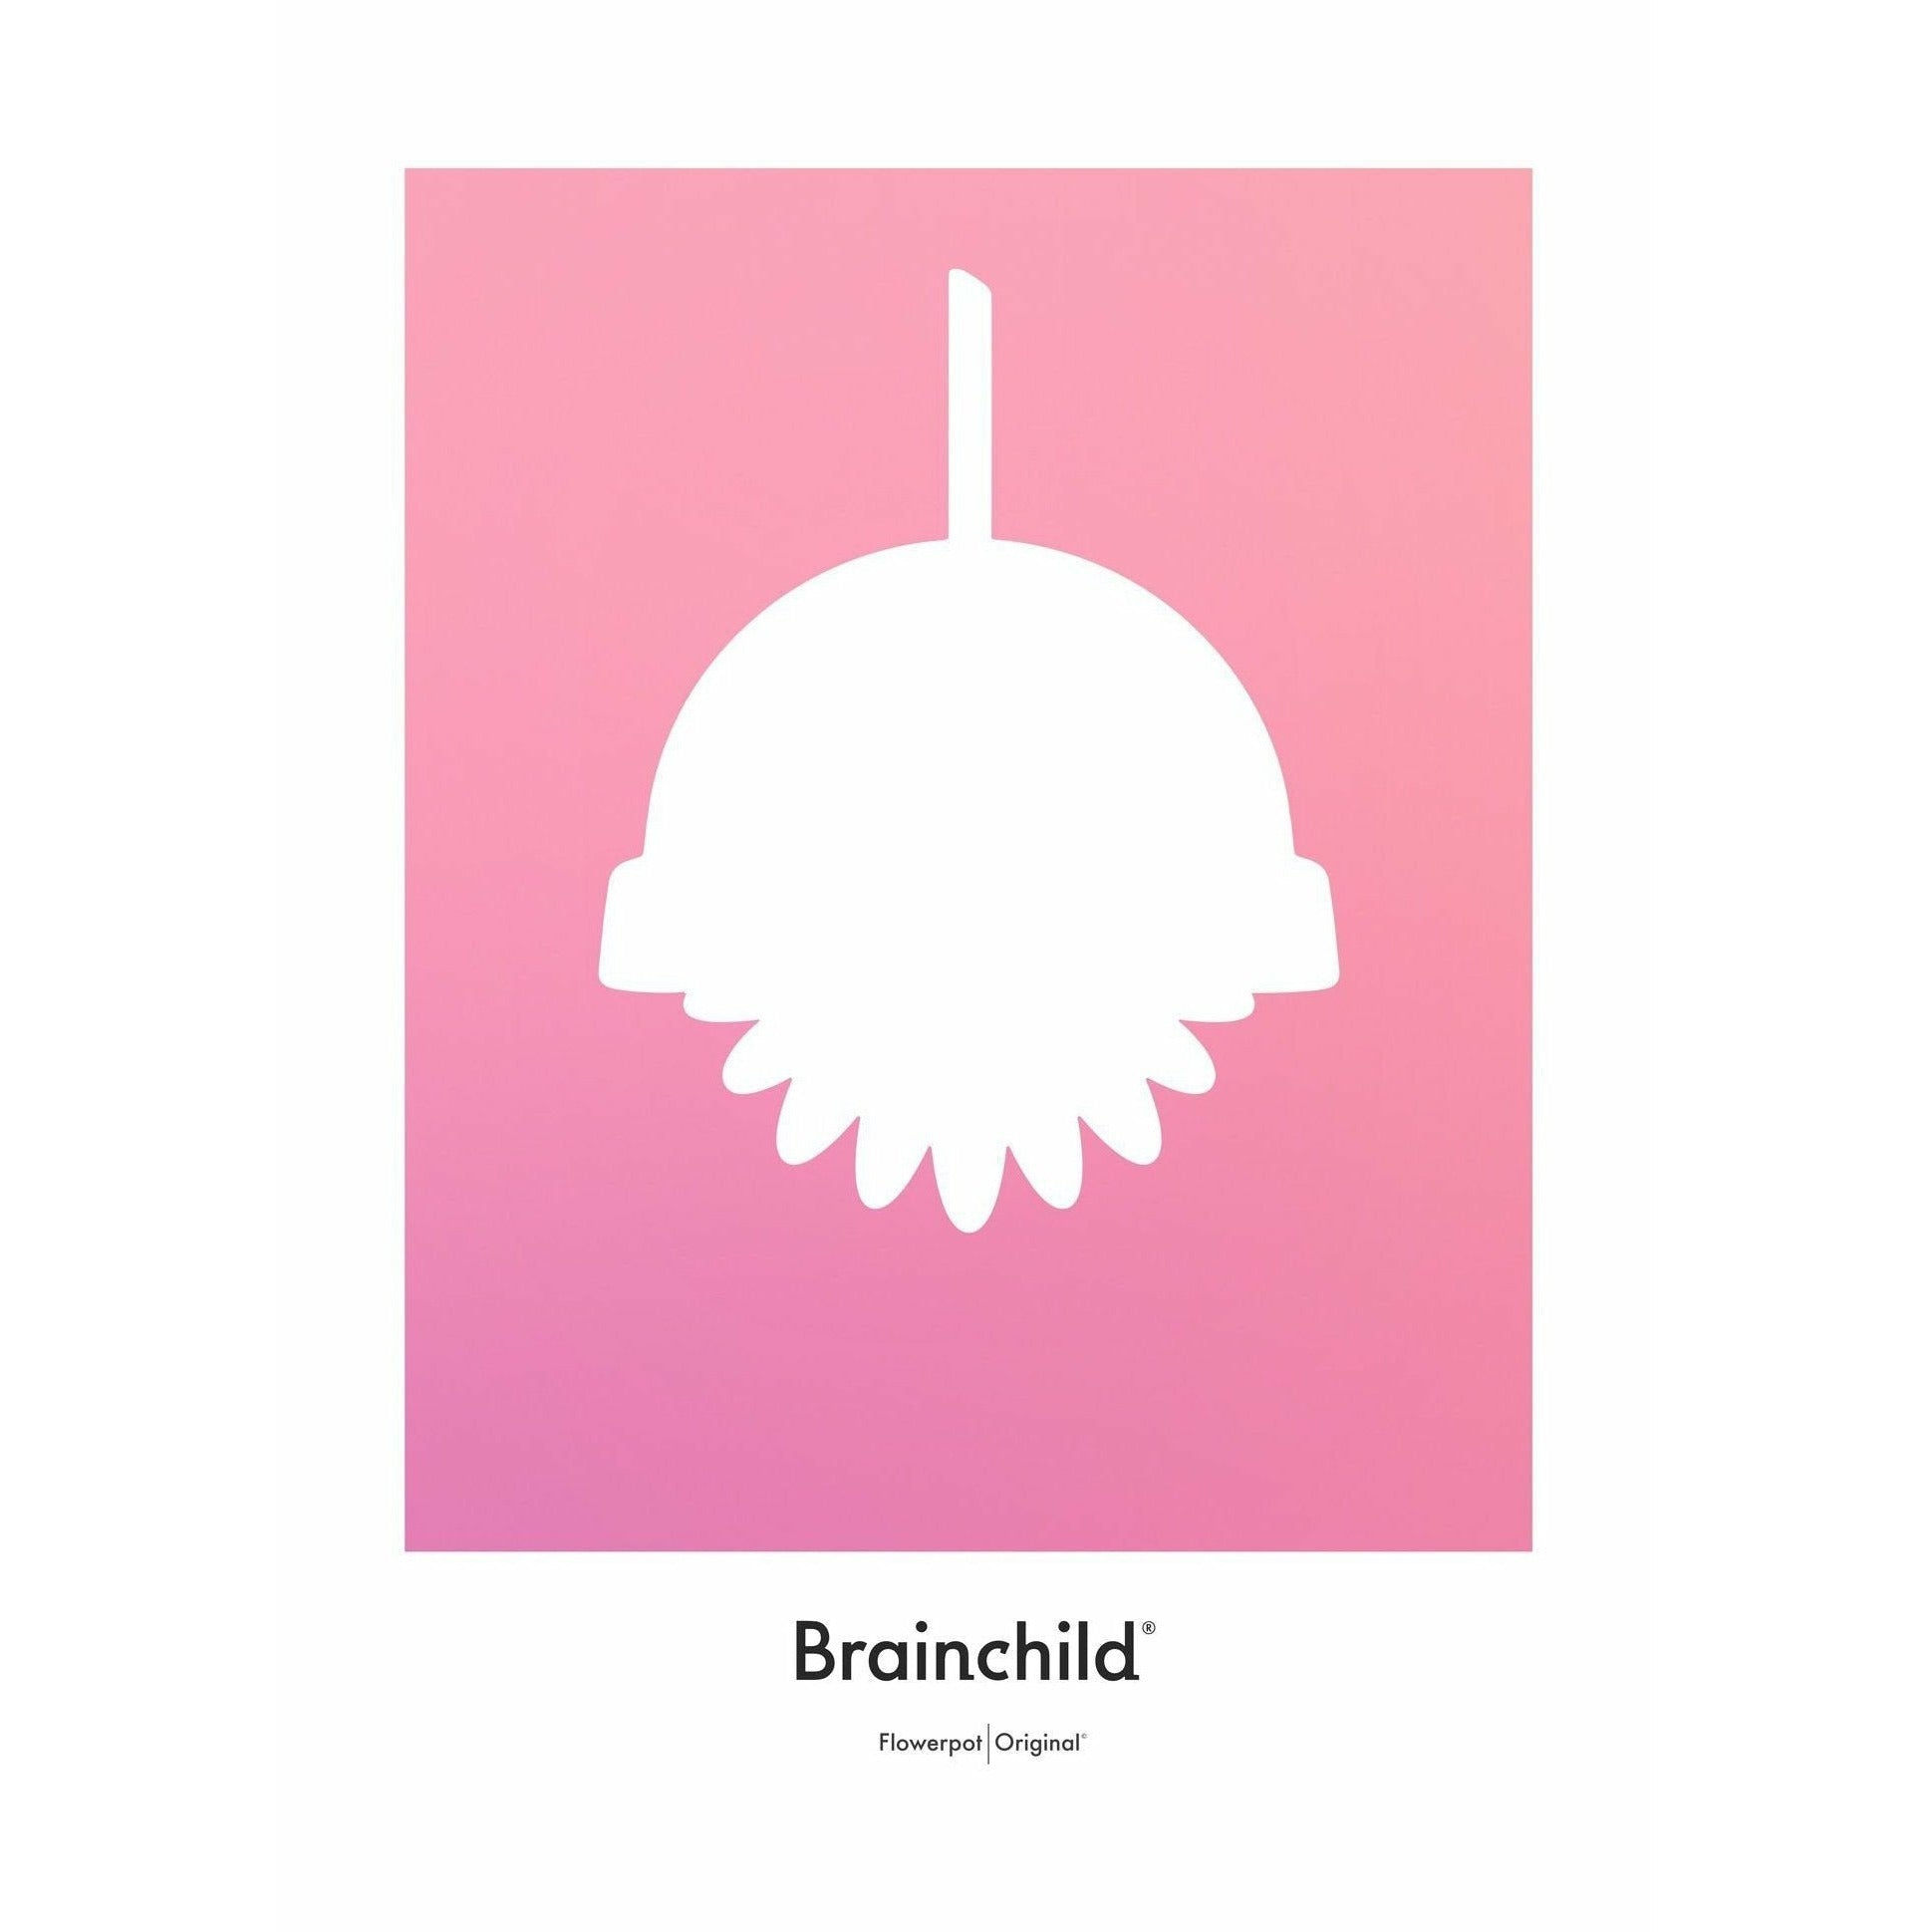 Brainchild Blumentopf Design Icon Poster ohne Rahmen 50 X70 Cm, Rosa